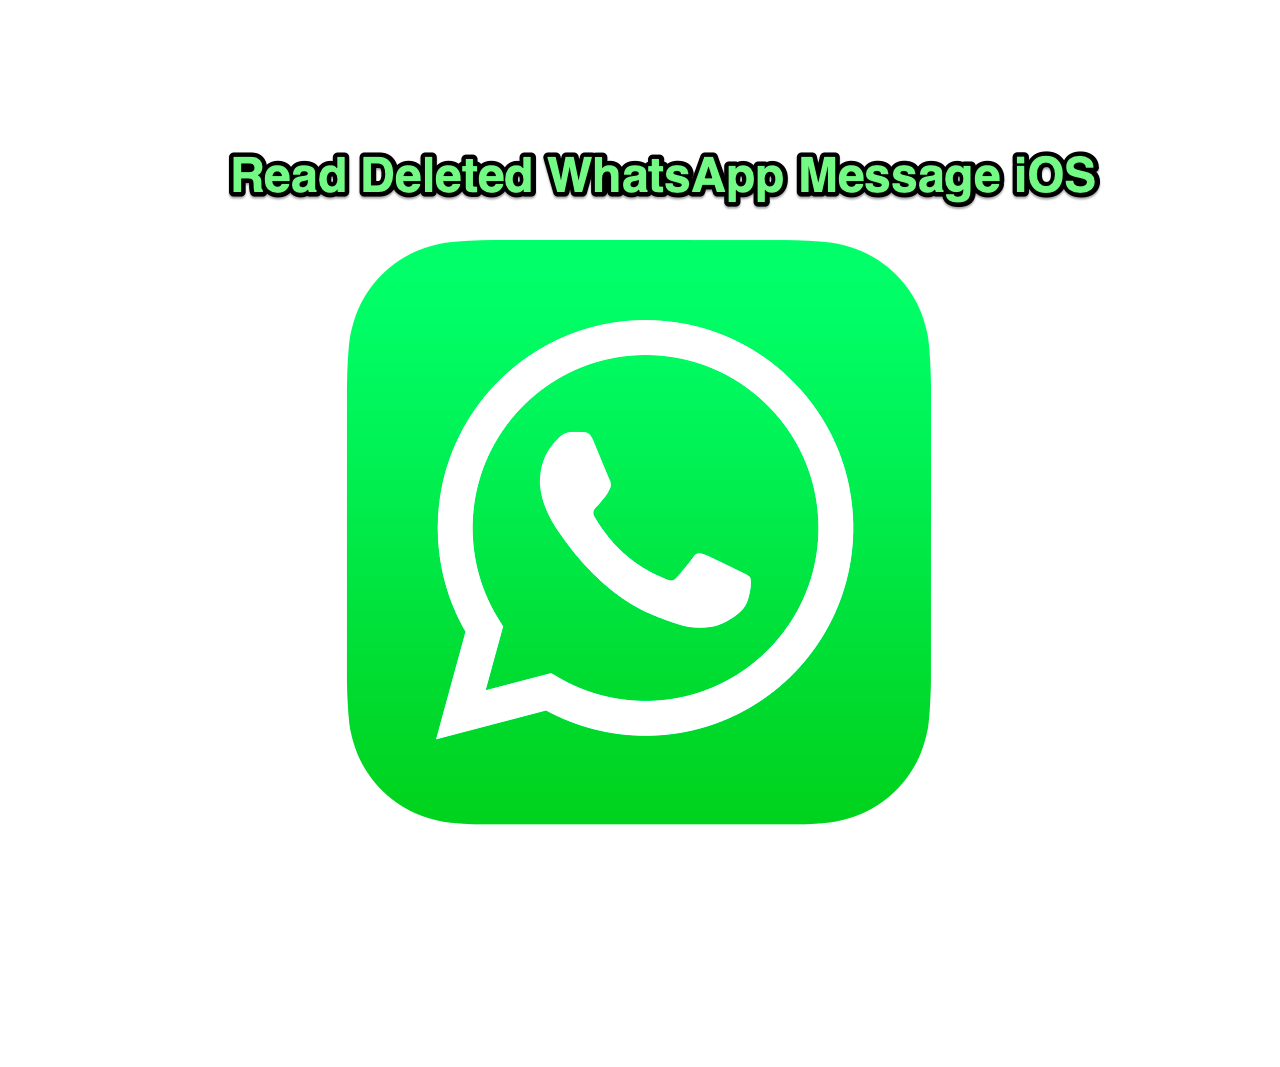 Read Deleted WhatsApp iOS